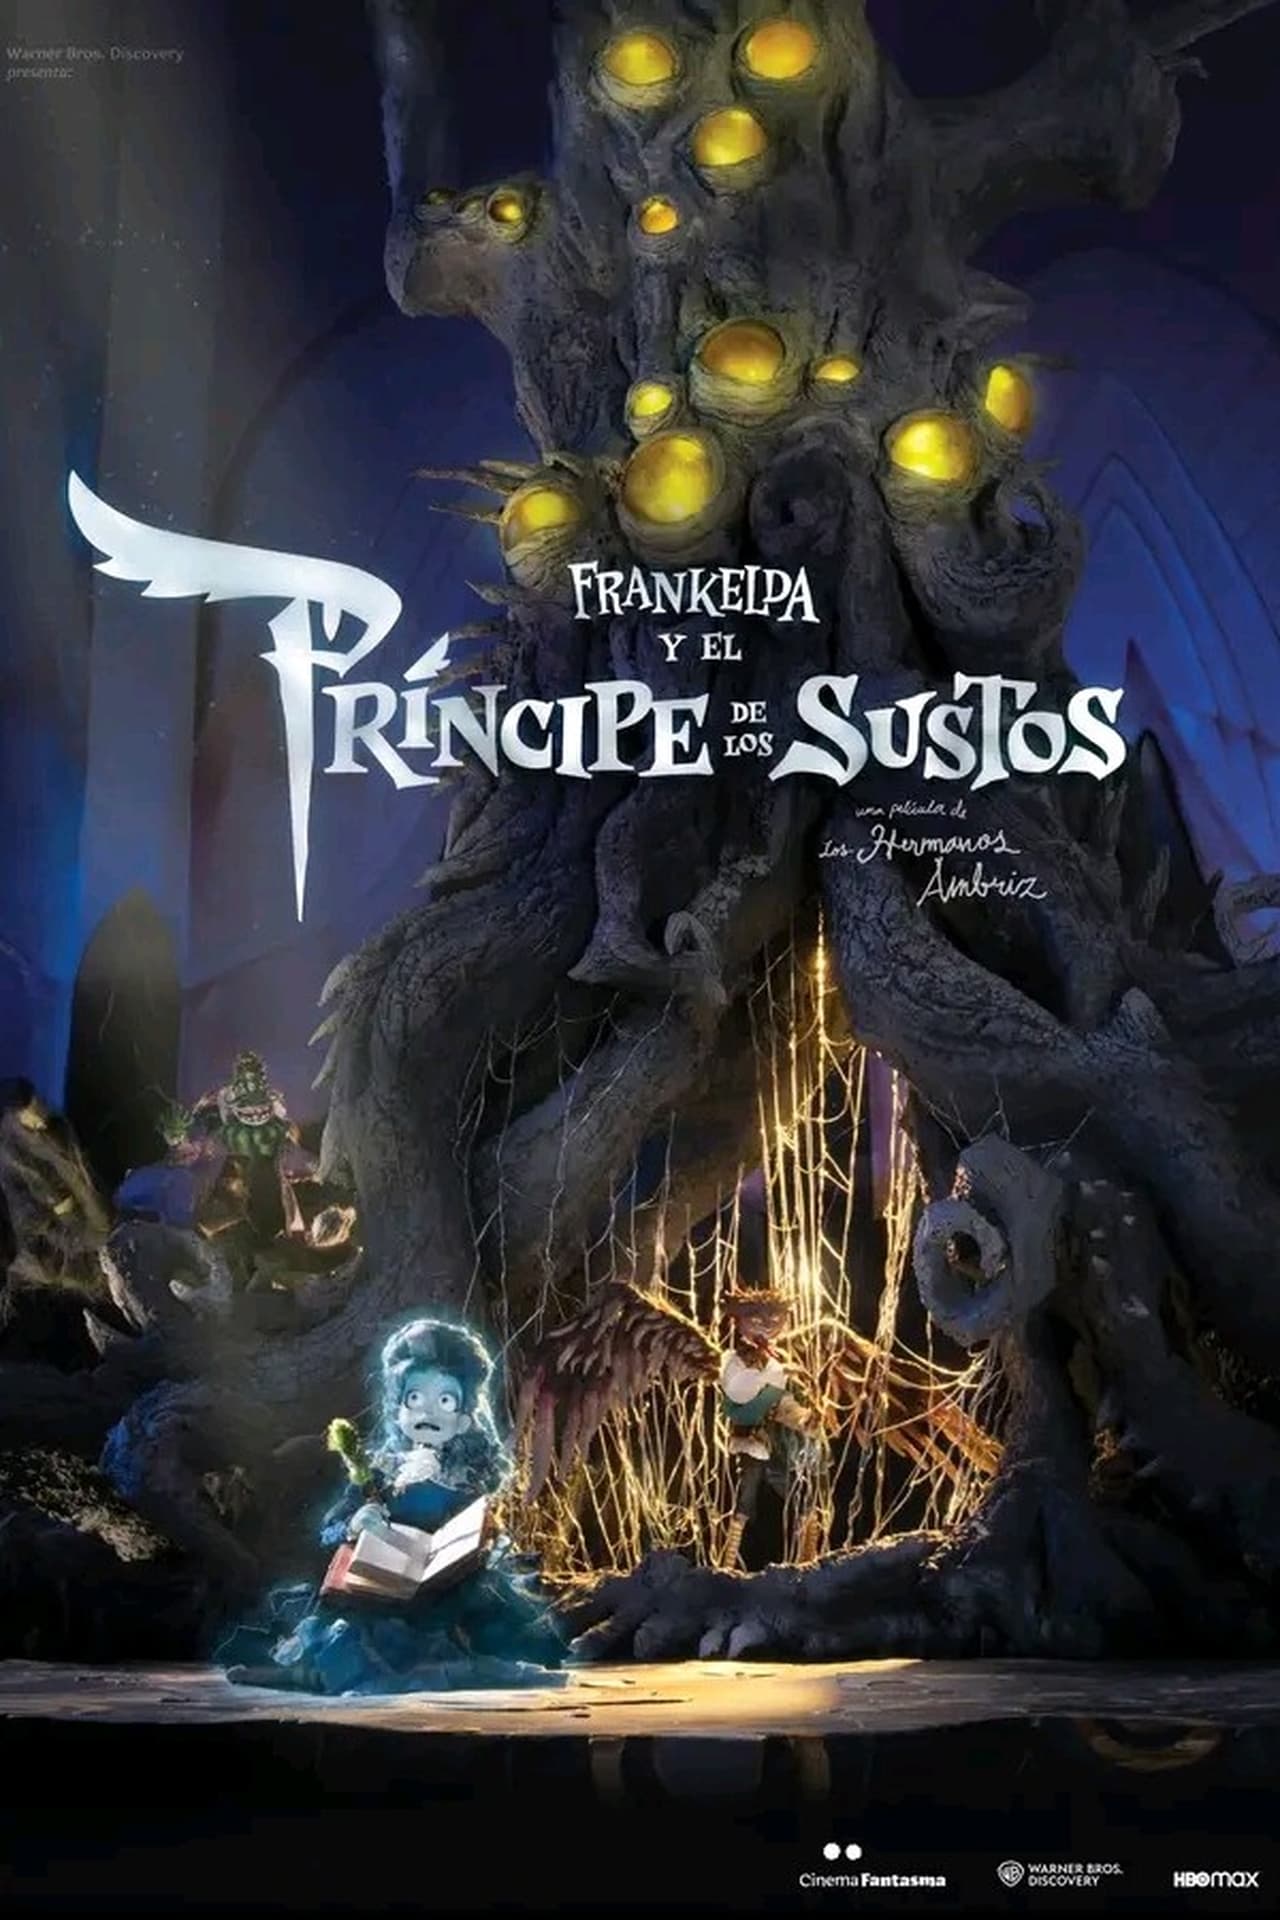 Frankelda and the Prince of Spooks